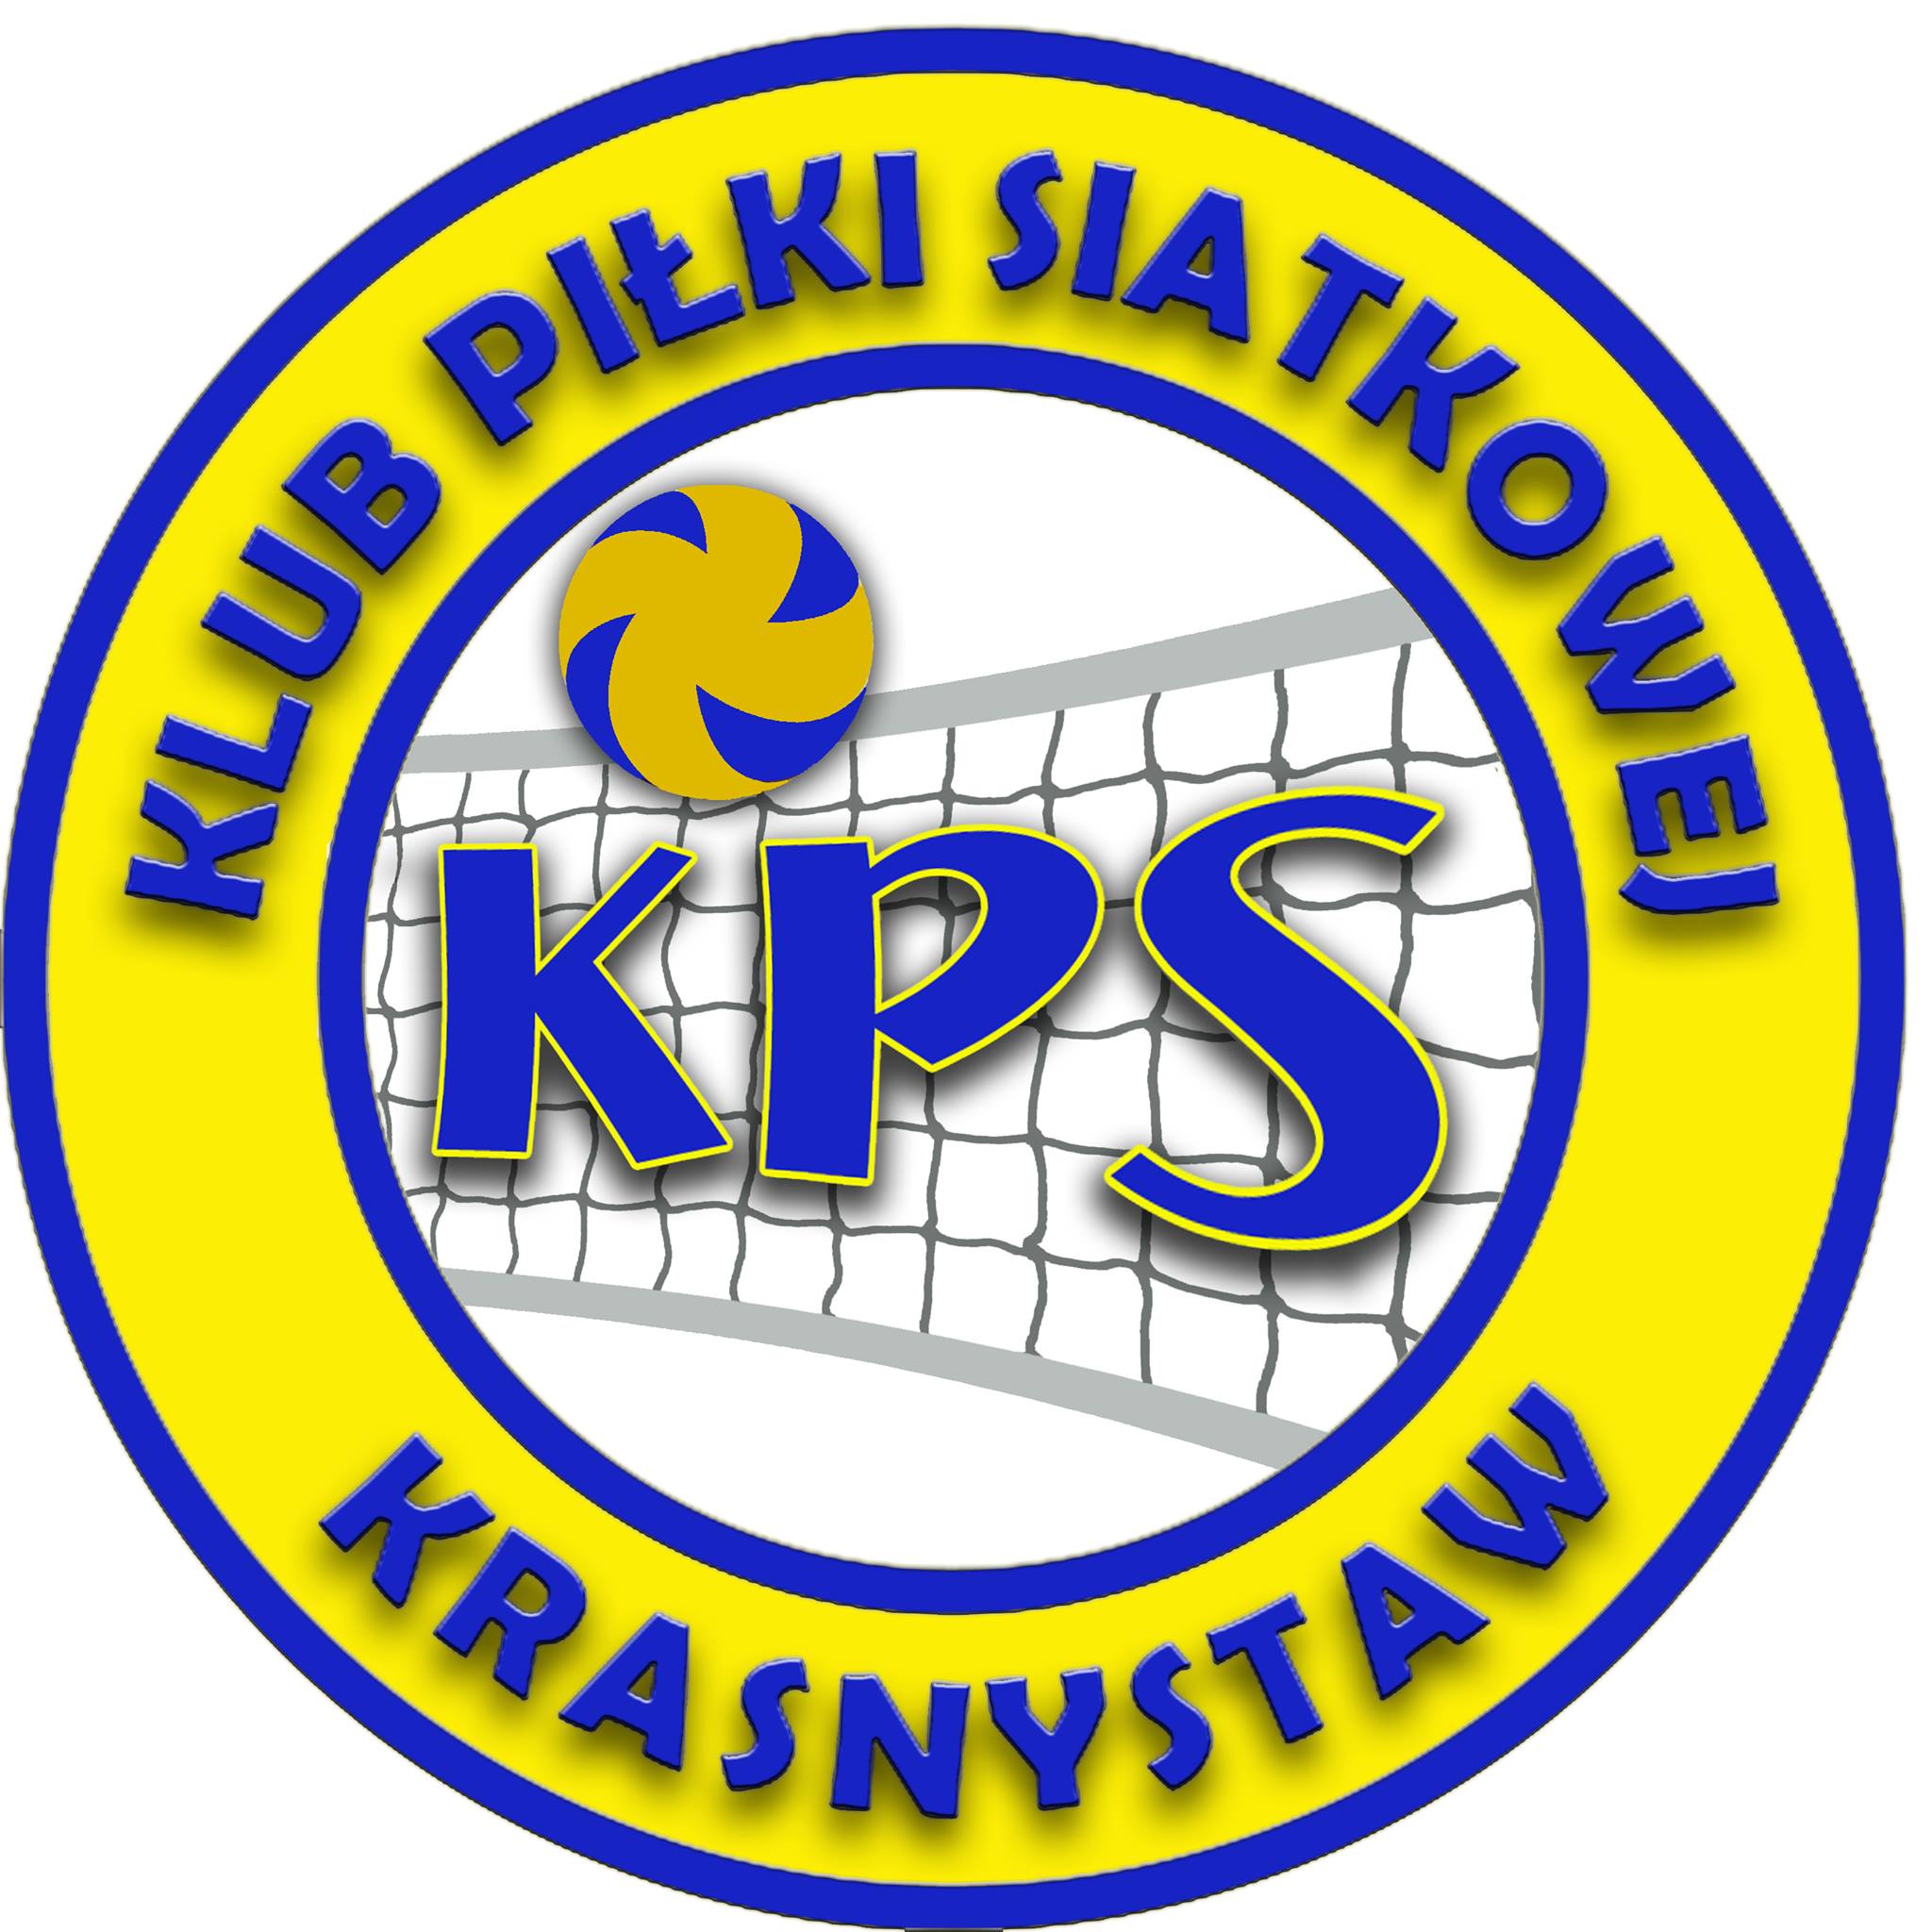 KPS Krasnystaw Logo